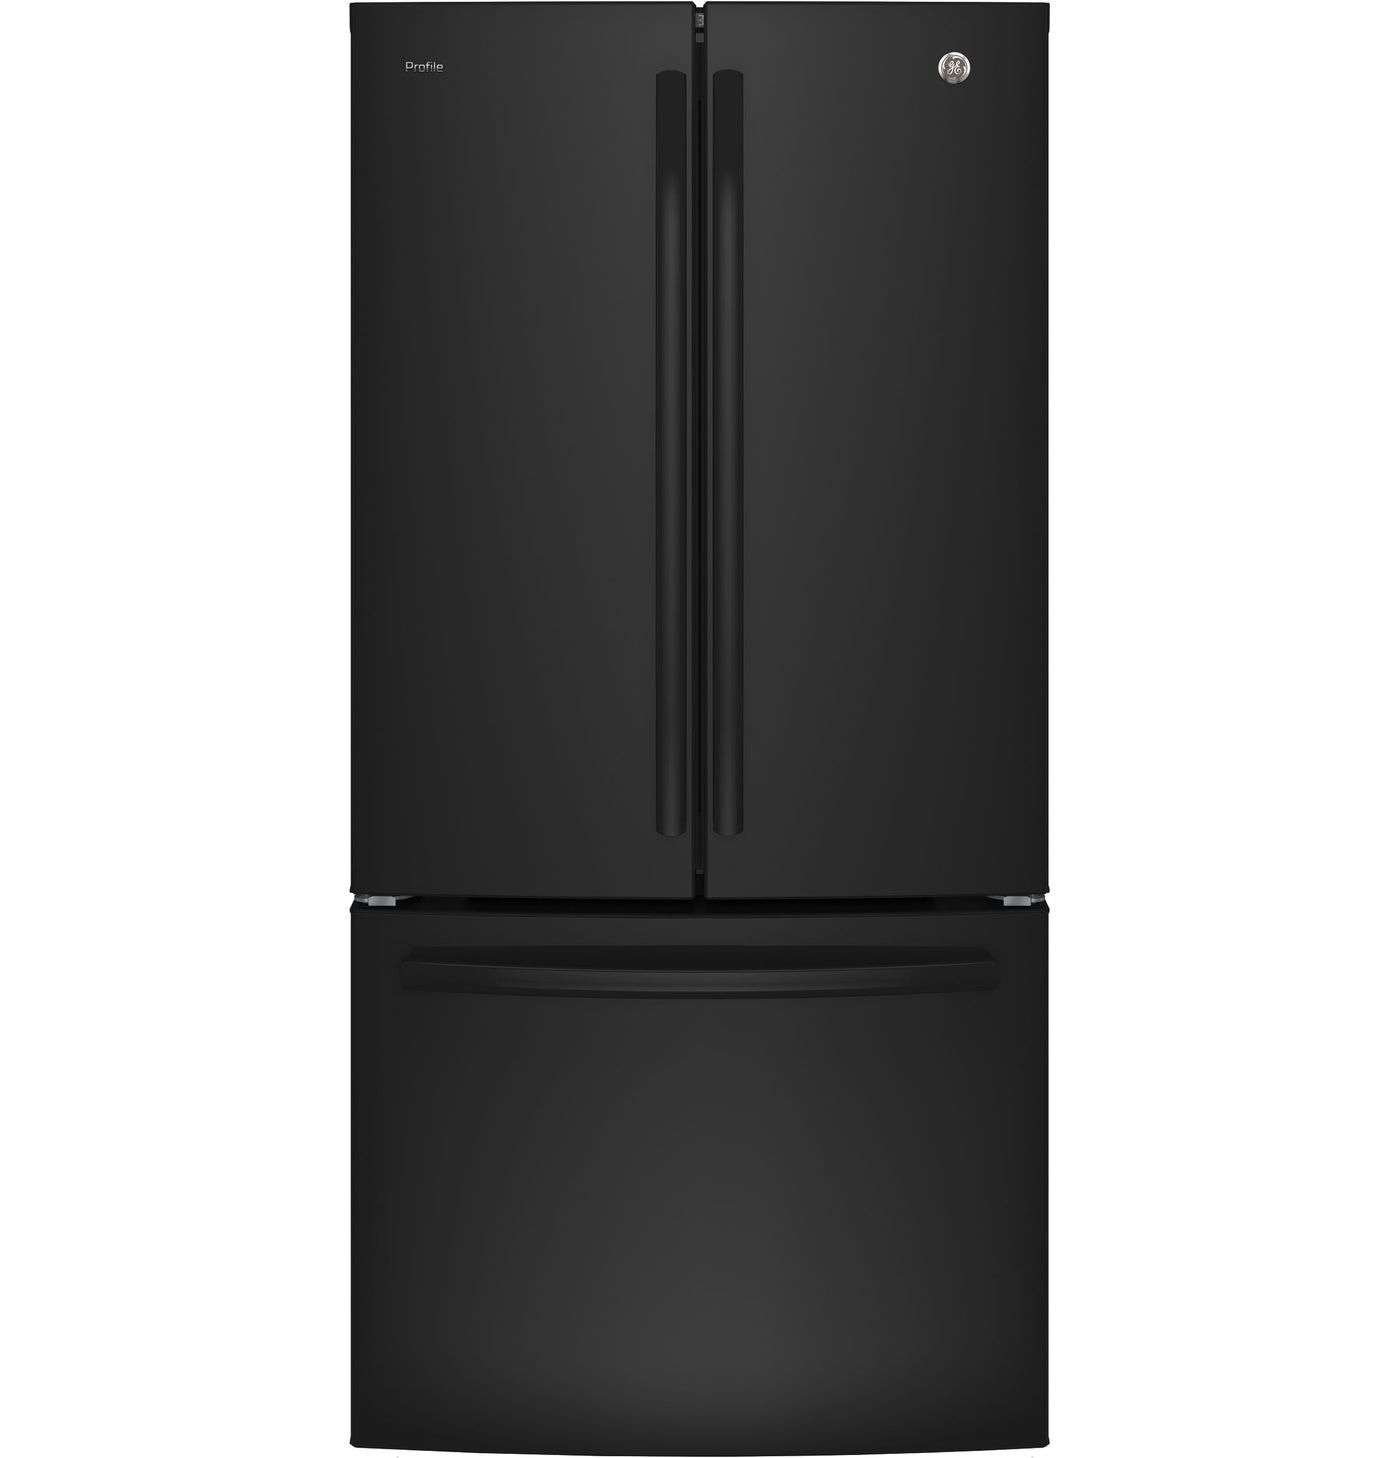 GE Profile Black French Door Refrigerator (24.8 Cu. Ft.) - PNE25NGLKBB